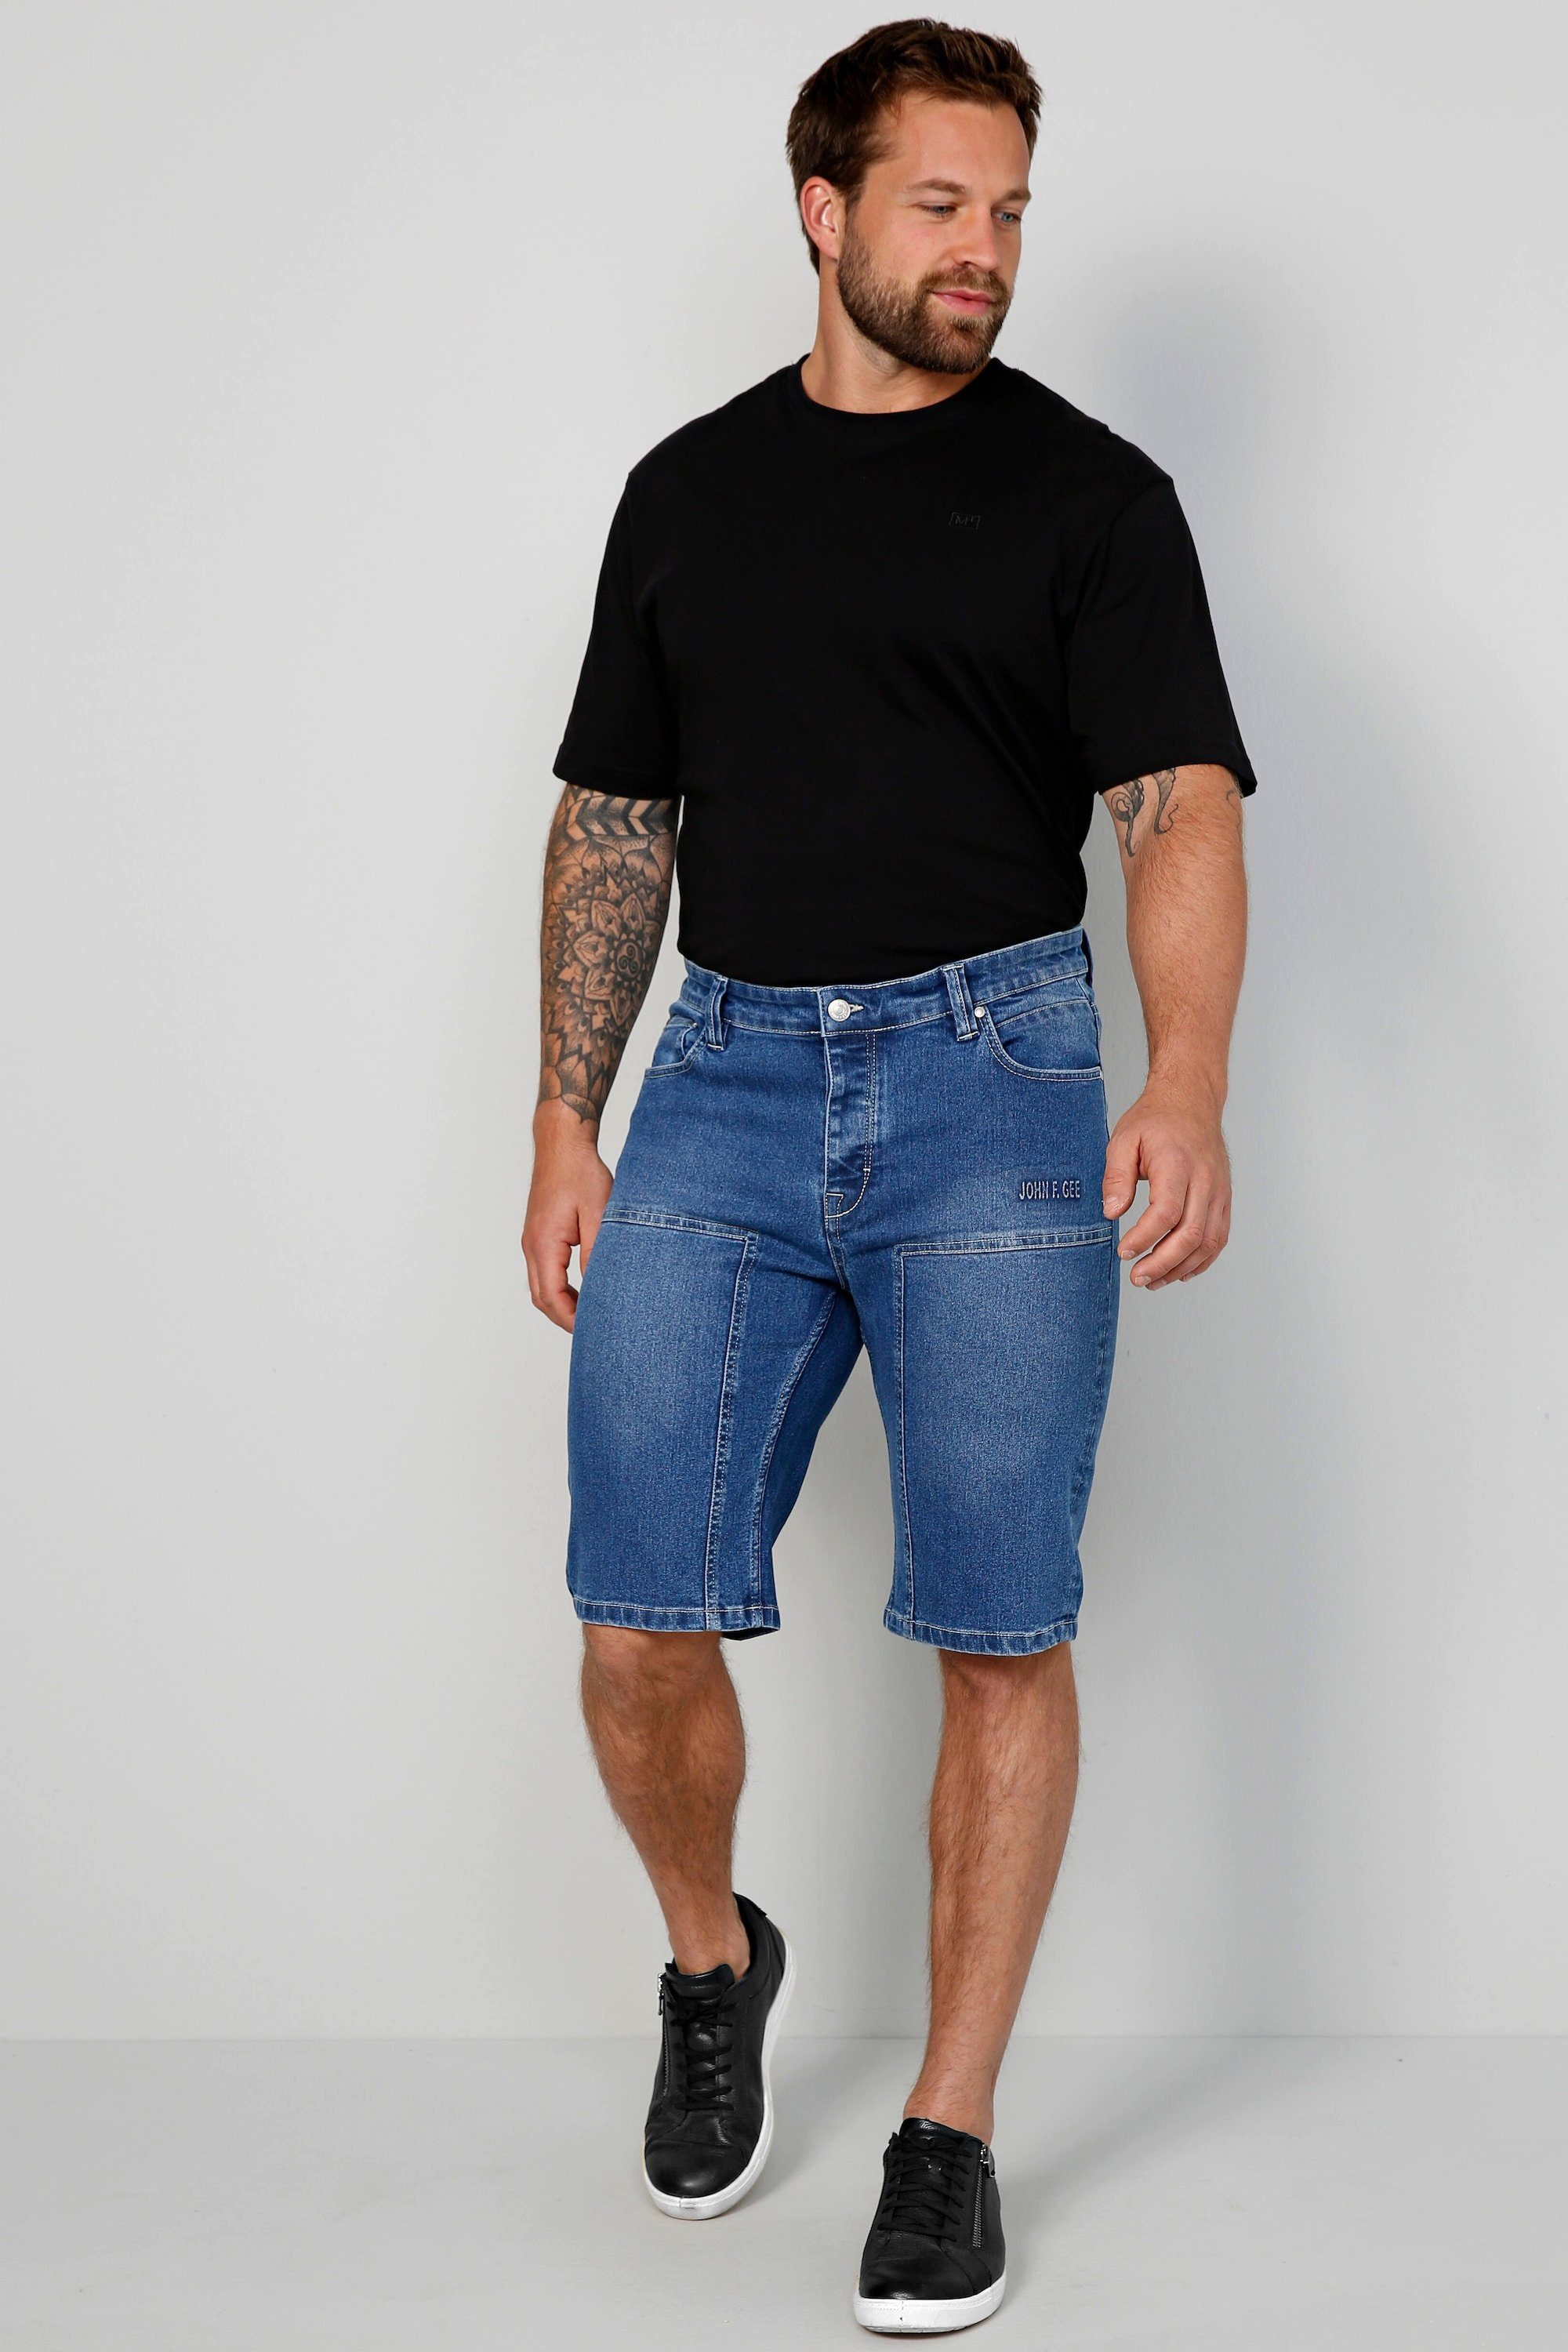 John F. Gee Jeansbermudas John F. Gee Jeans-Bermuda Regular Fit 5-Pocket